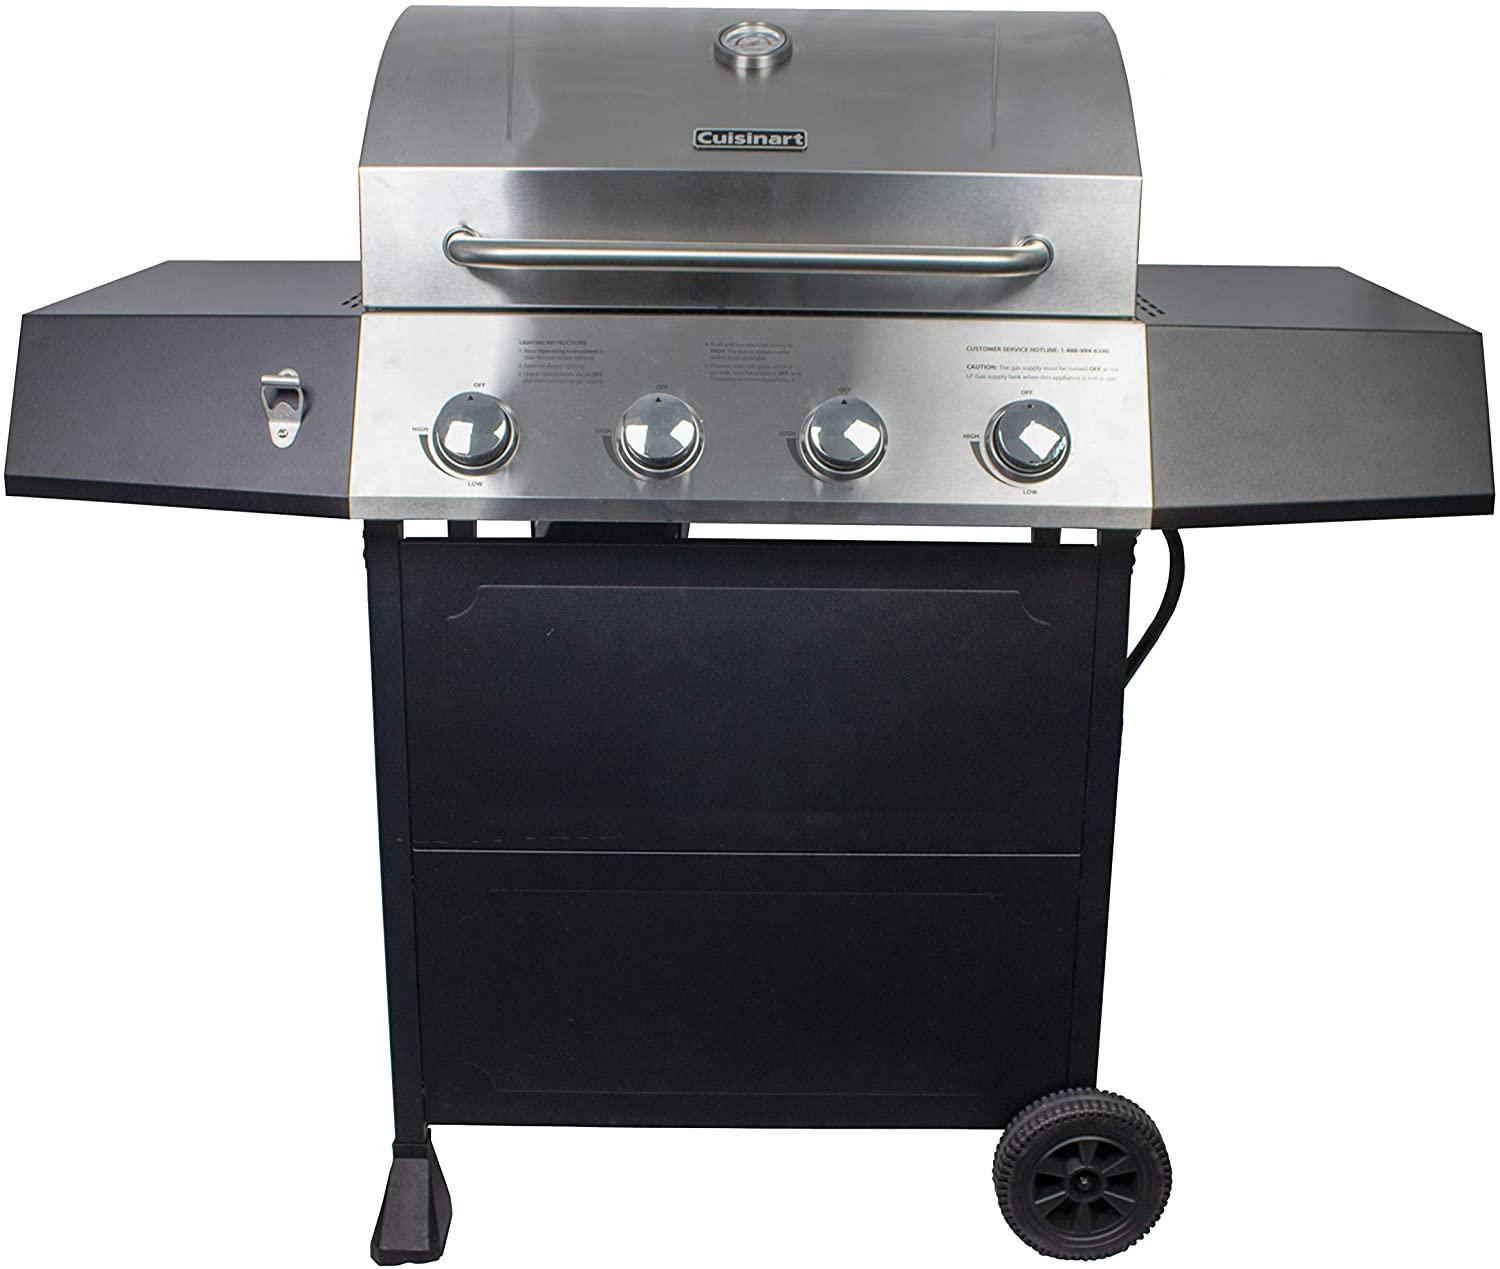 Cuisinart 54in 4-Burner 44000 BTU Propane Gas Grill CGG-7400 for $189.99 Shipped